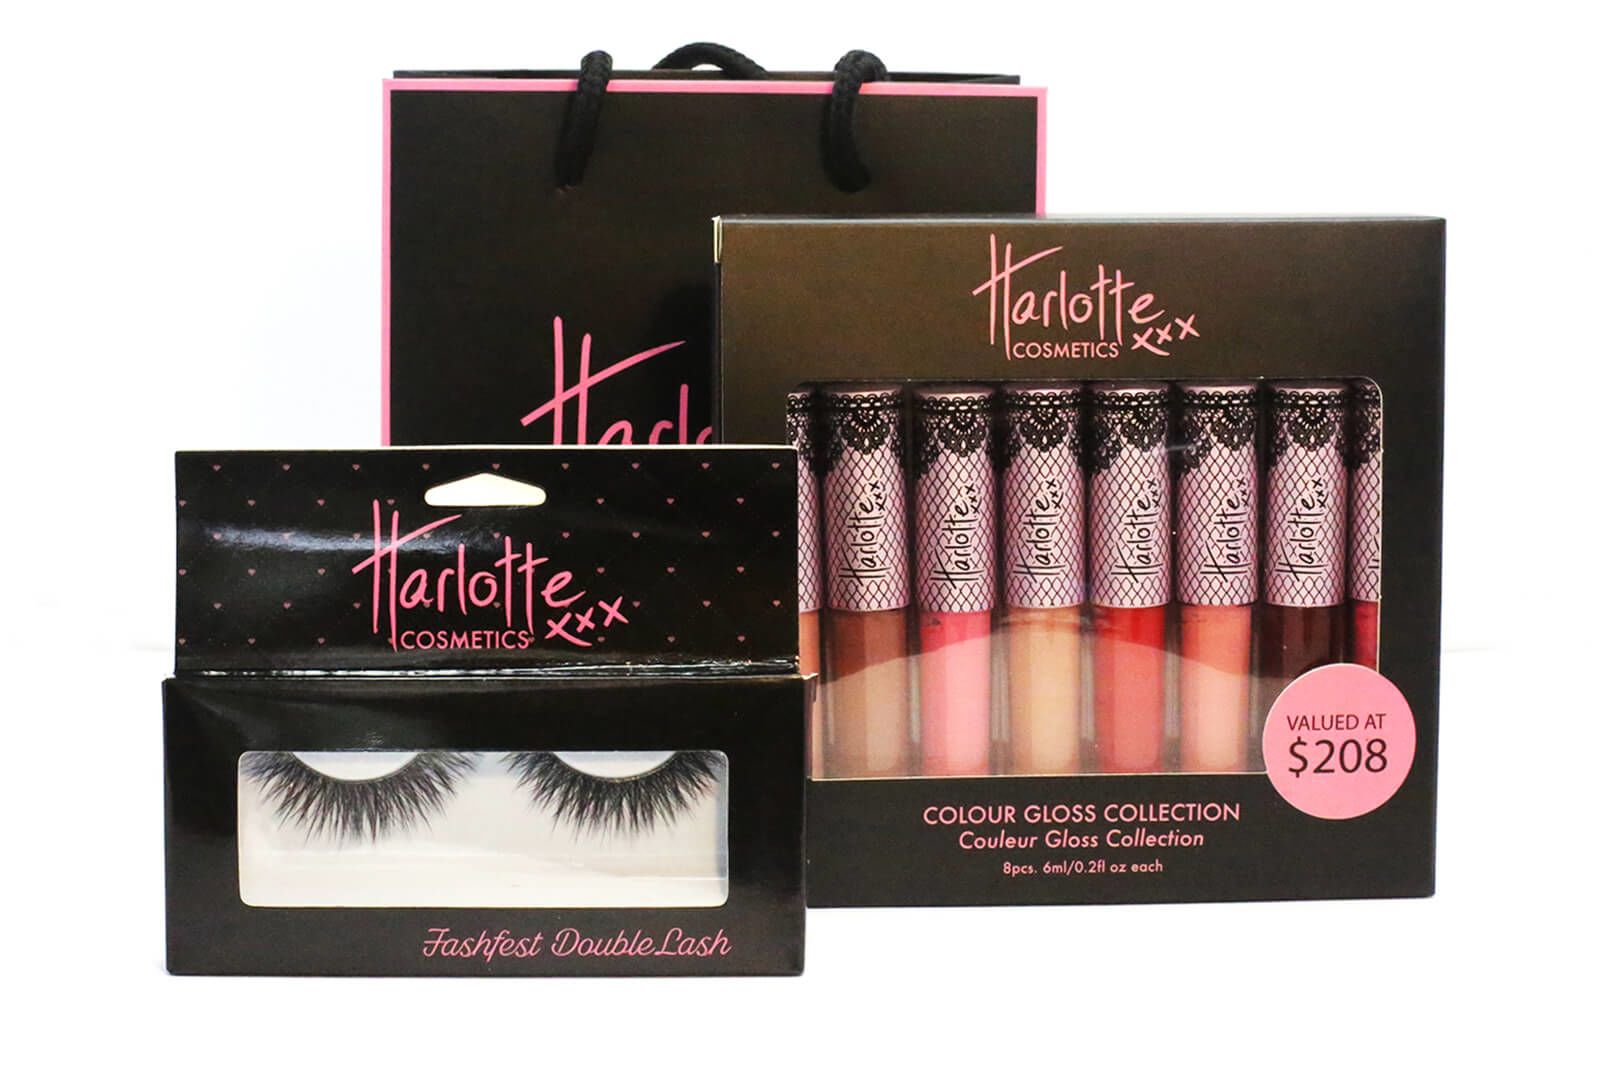  Product  Packaging  Harlotte Cosmetics  Metro Design 